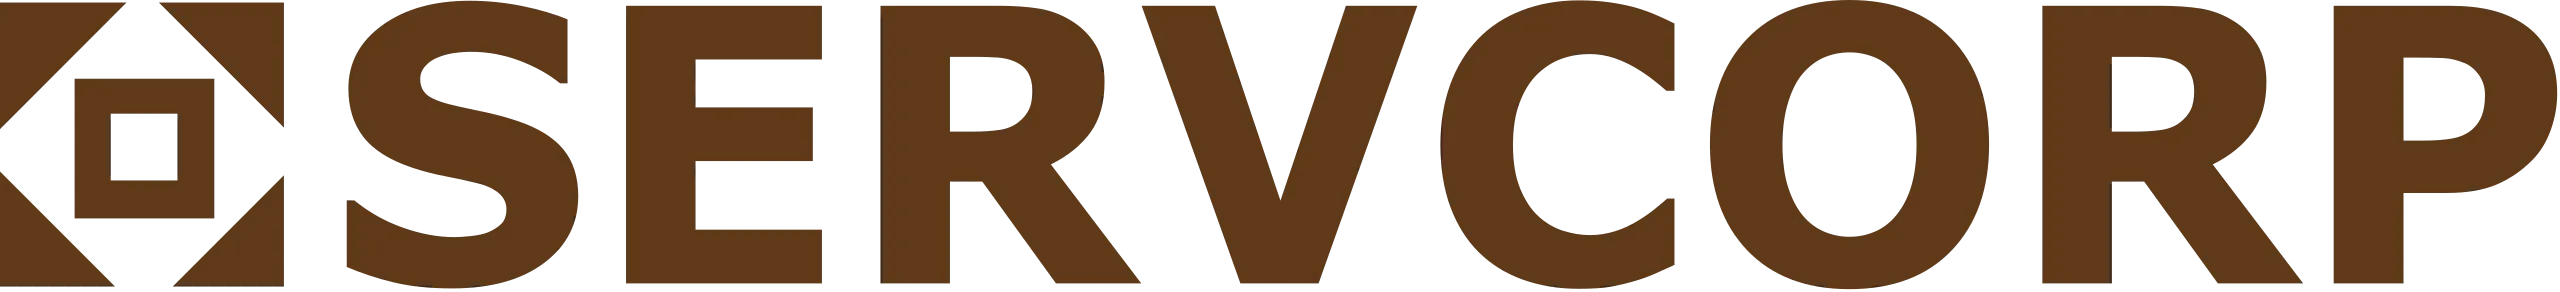 Servcorp logo